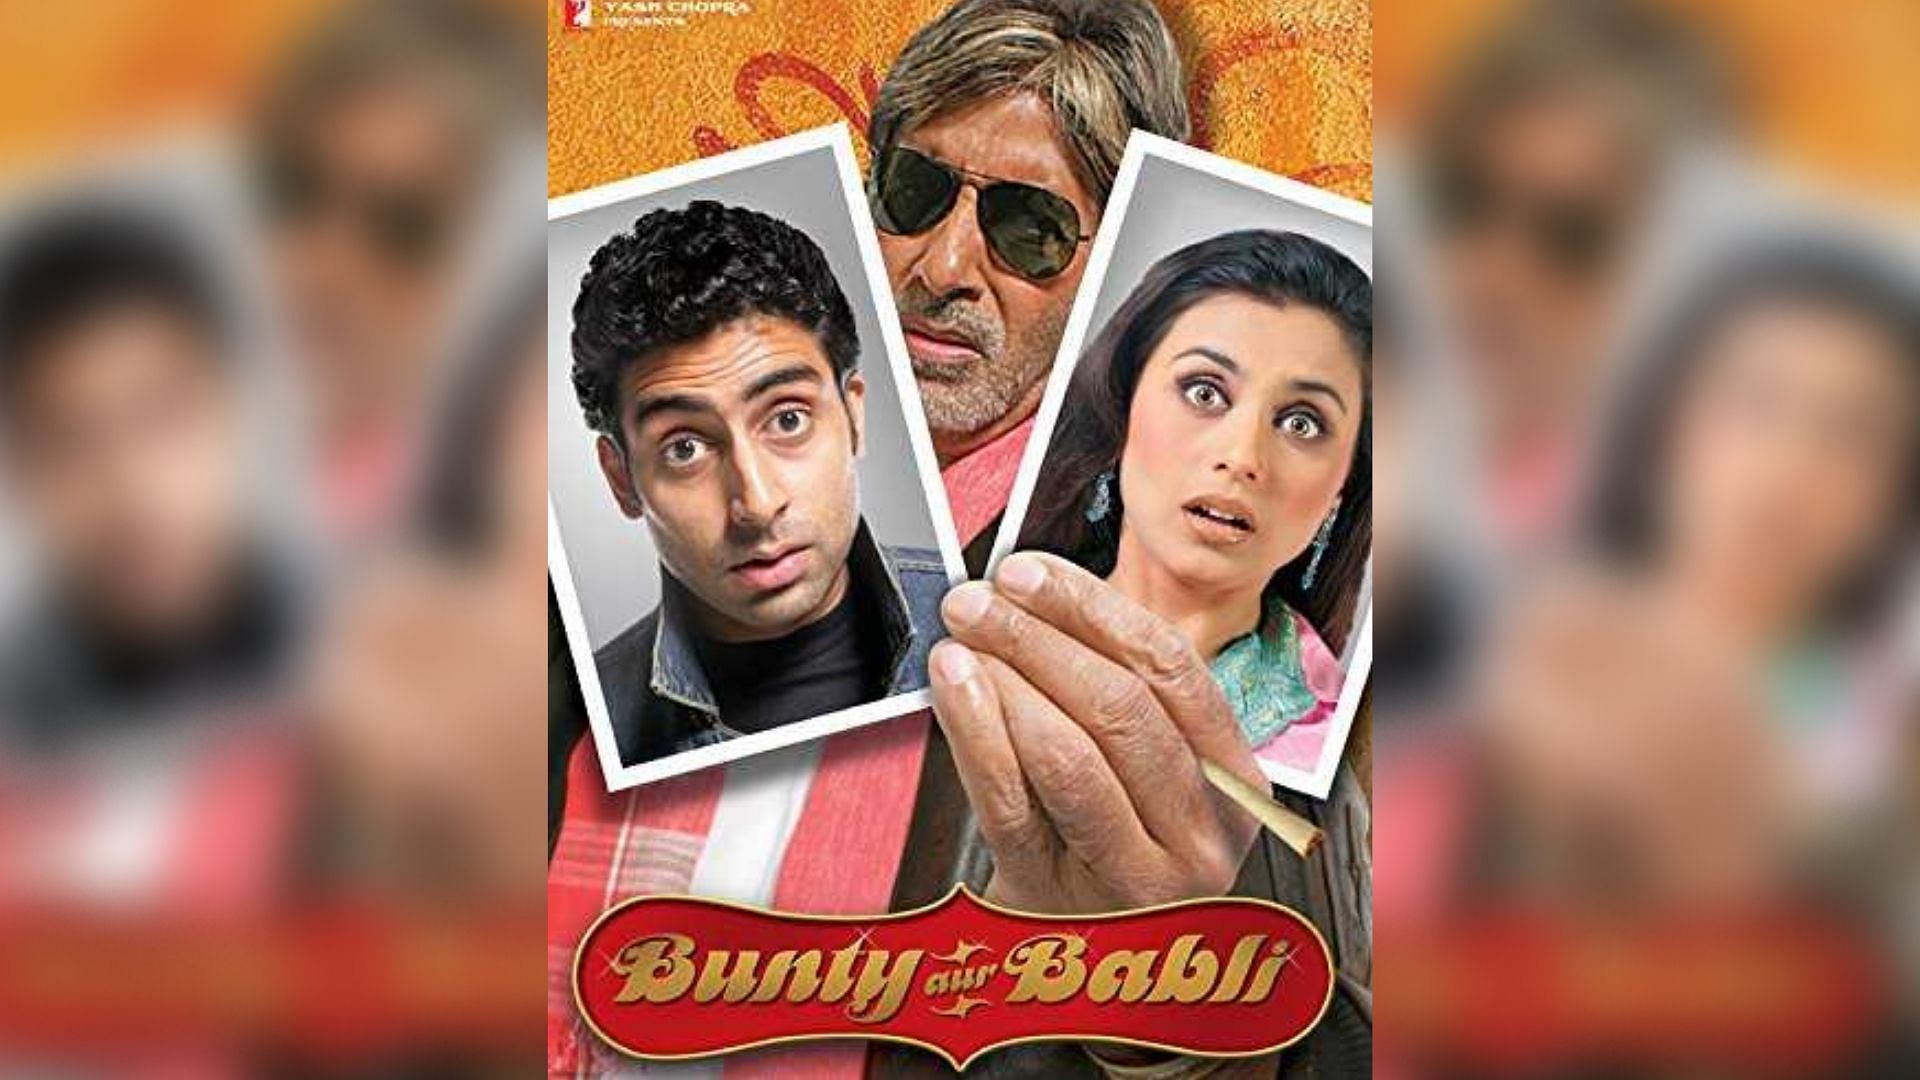 The poster of <i>Bunty aur Babli.</i>